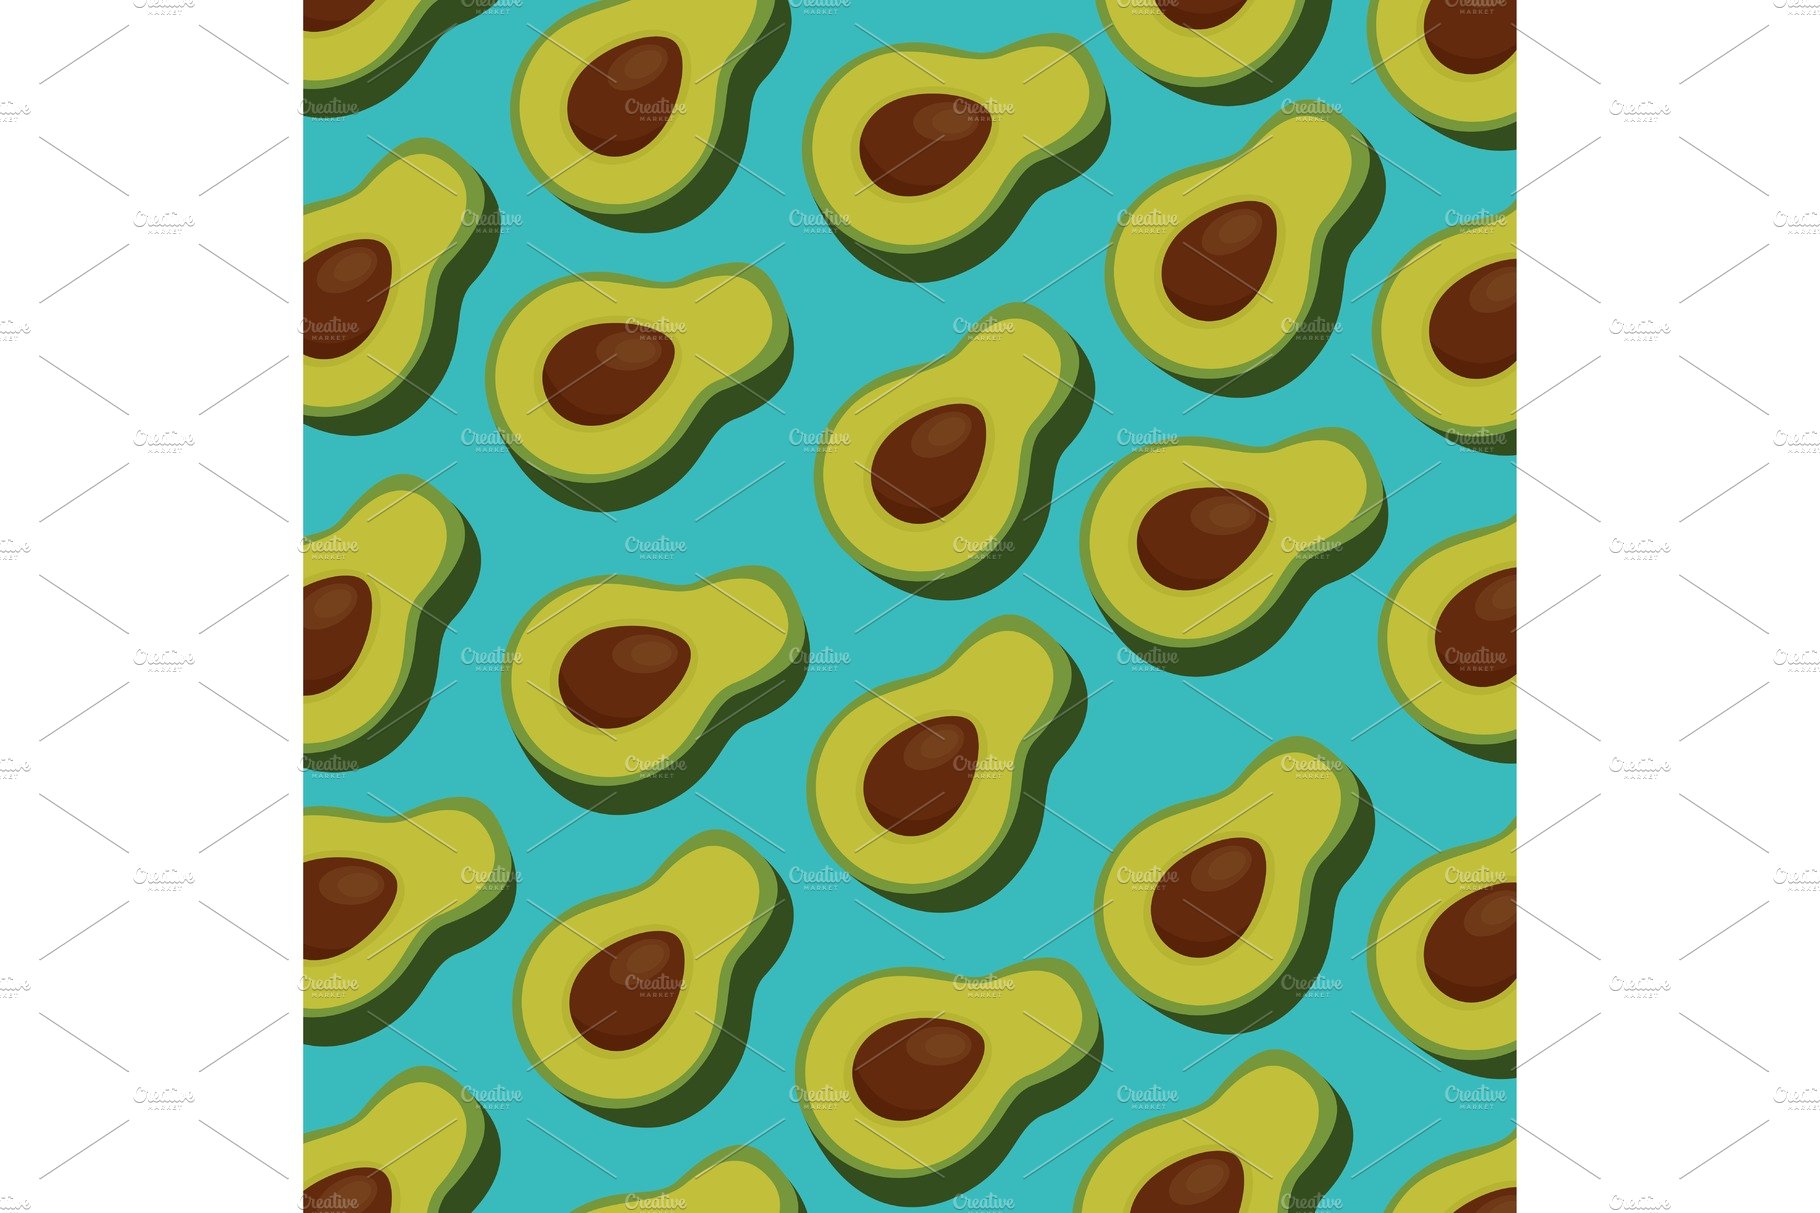 fresh avocado pattern background cover image.